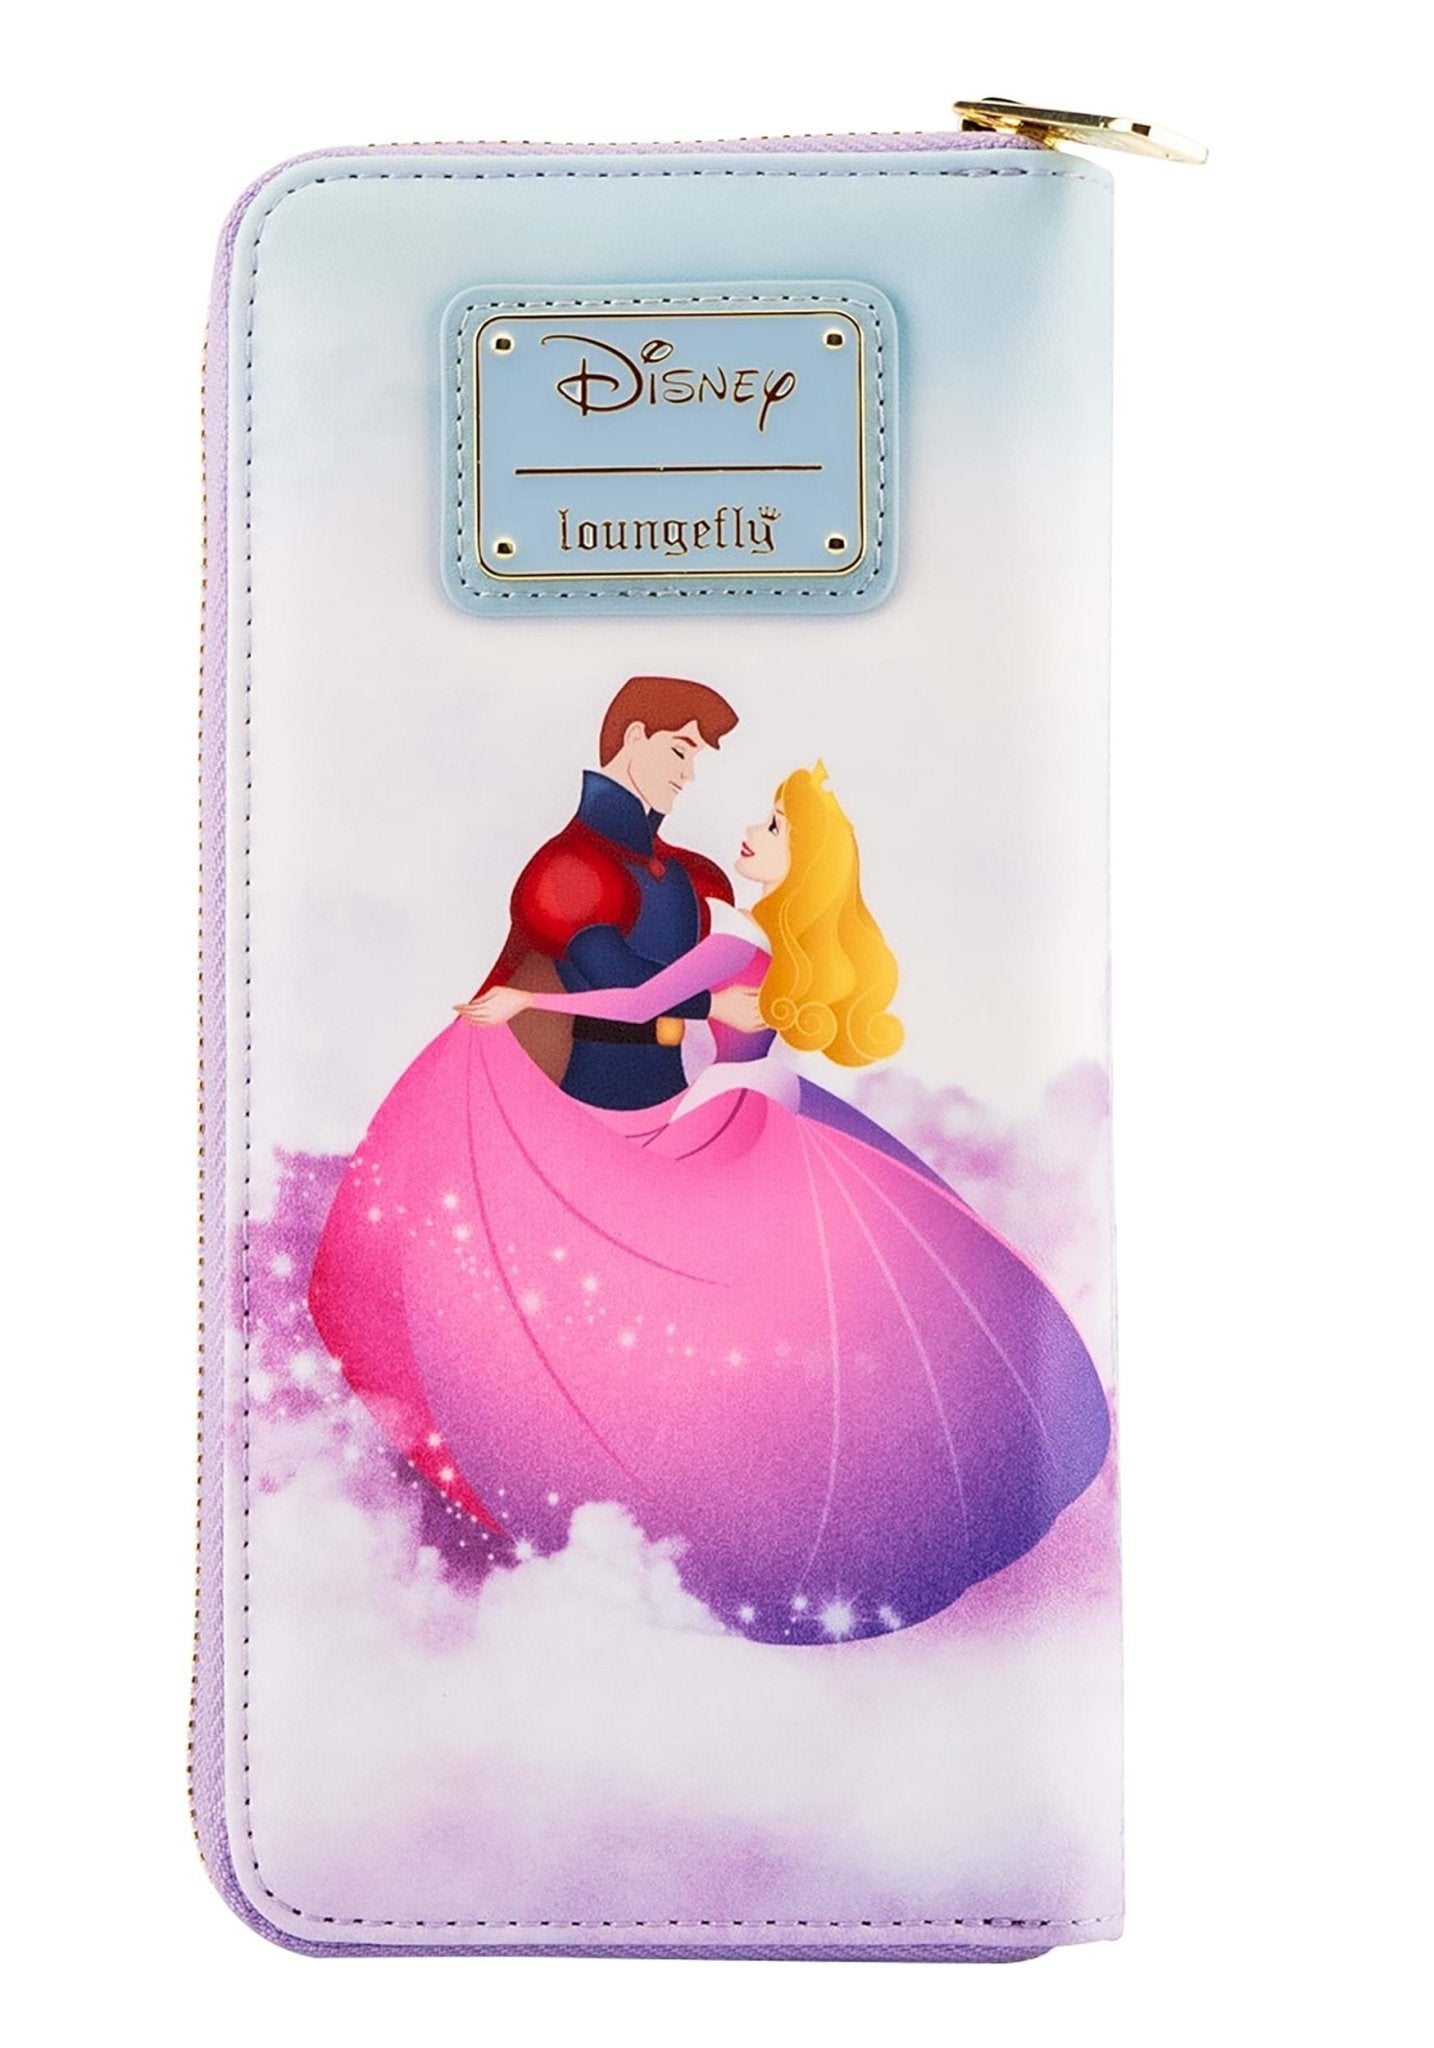 Disney Princess Castle Series Sleeping Beauty Zip Around Wallet - Loungefly - 2